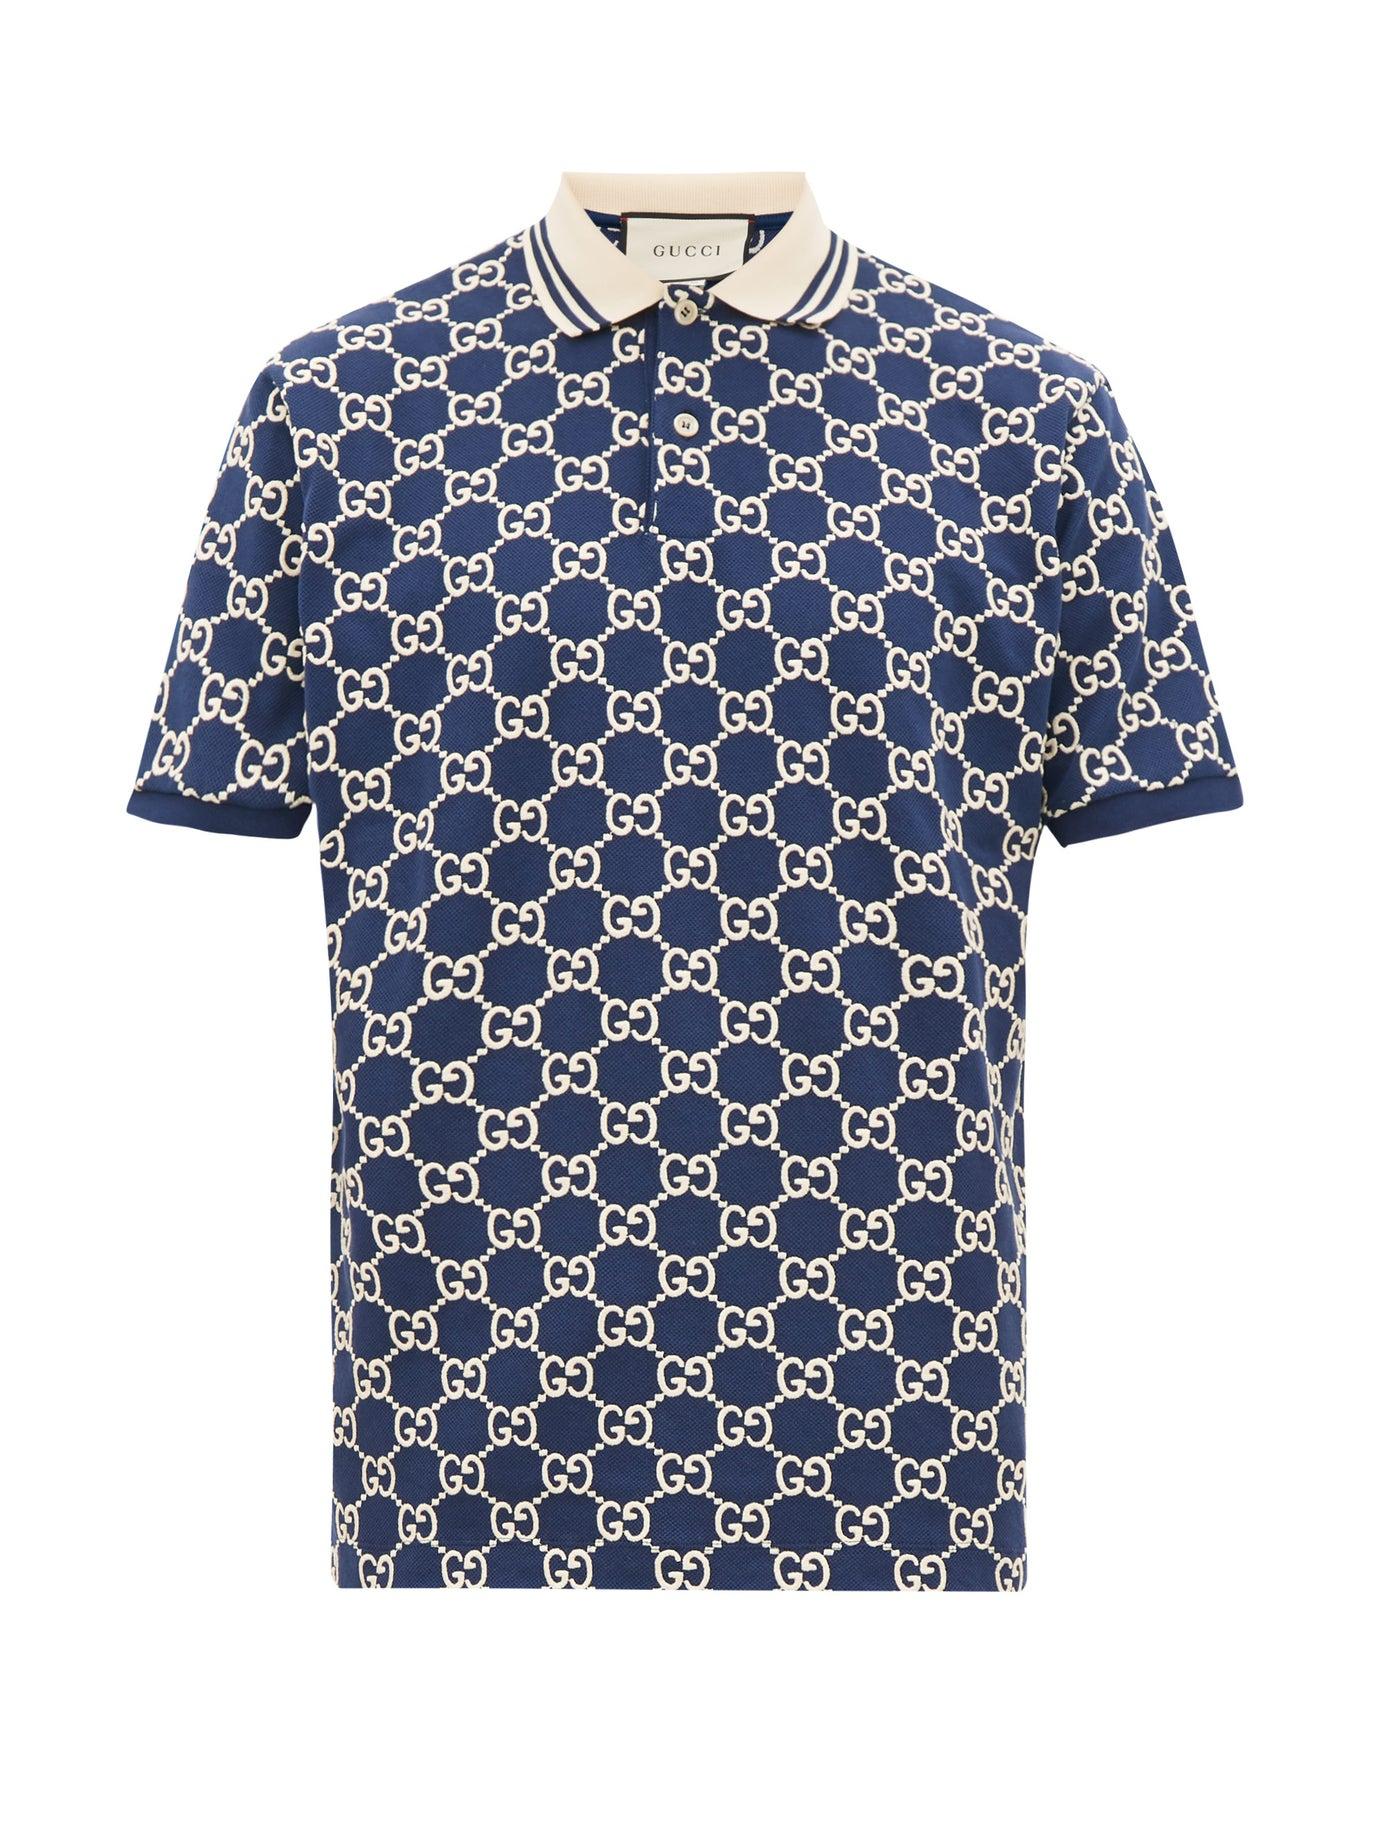 Gucci Cotton Gg Polo Shirt in Navy Blue 